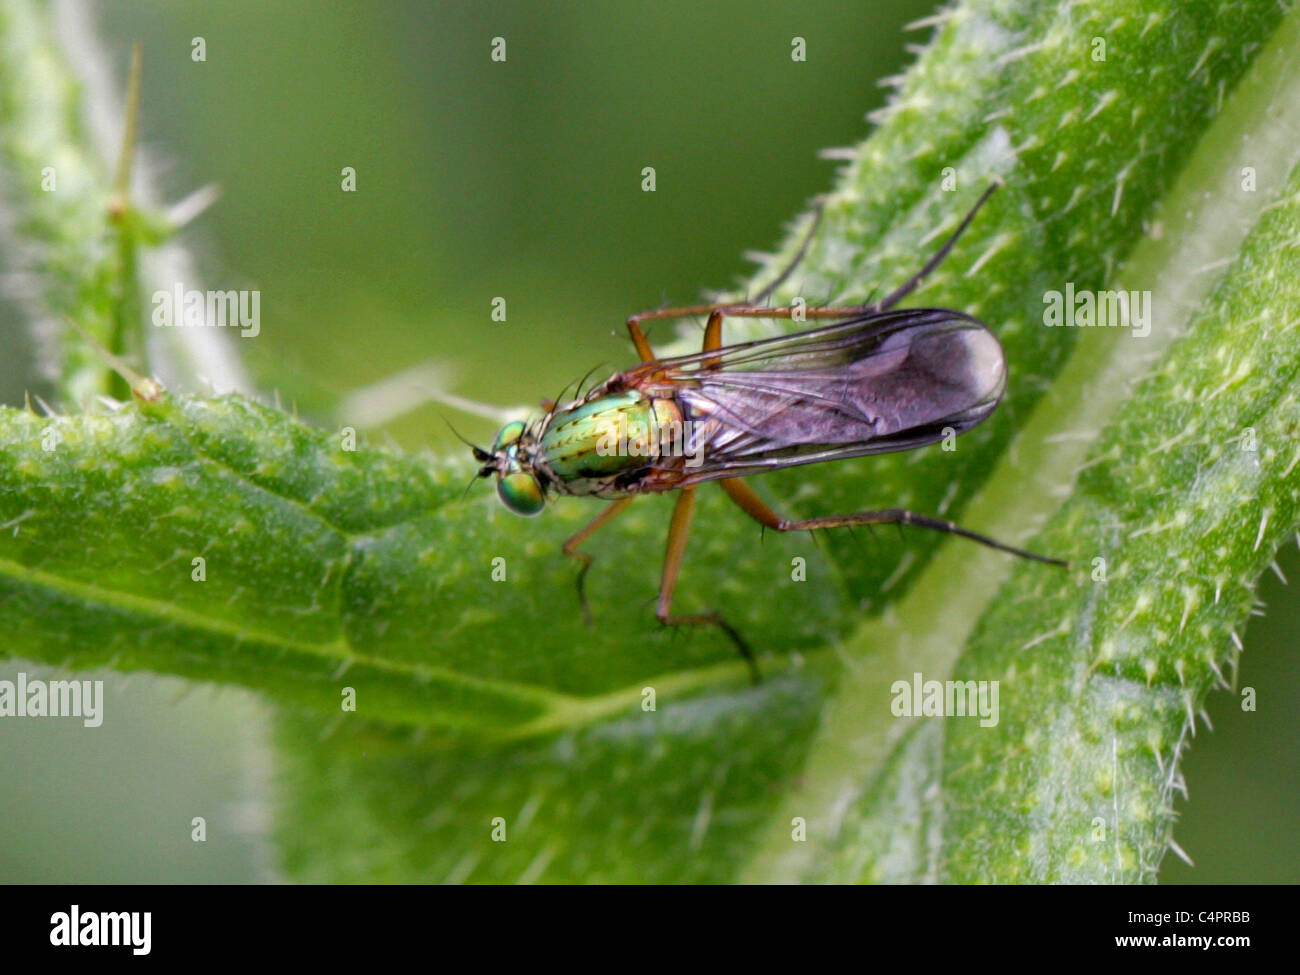 Long-legged Fly, Poecilobothrus nobilitatus, Dolichopodidae, Diptera. Aka. Semaphore Fly and Glittering Green Fly. Stock Photo